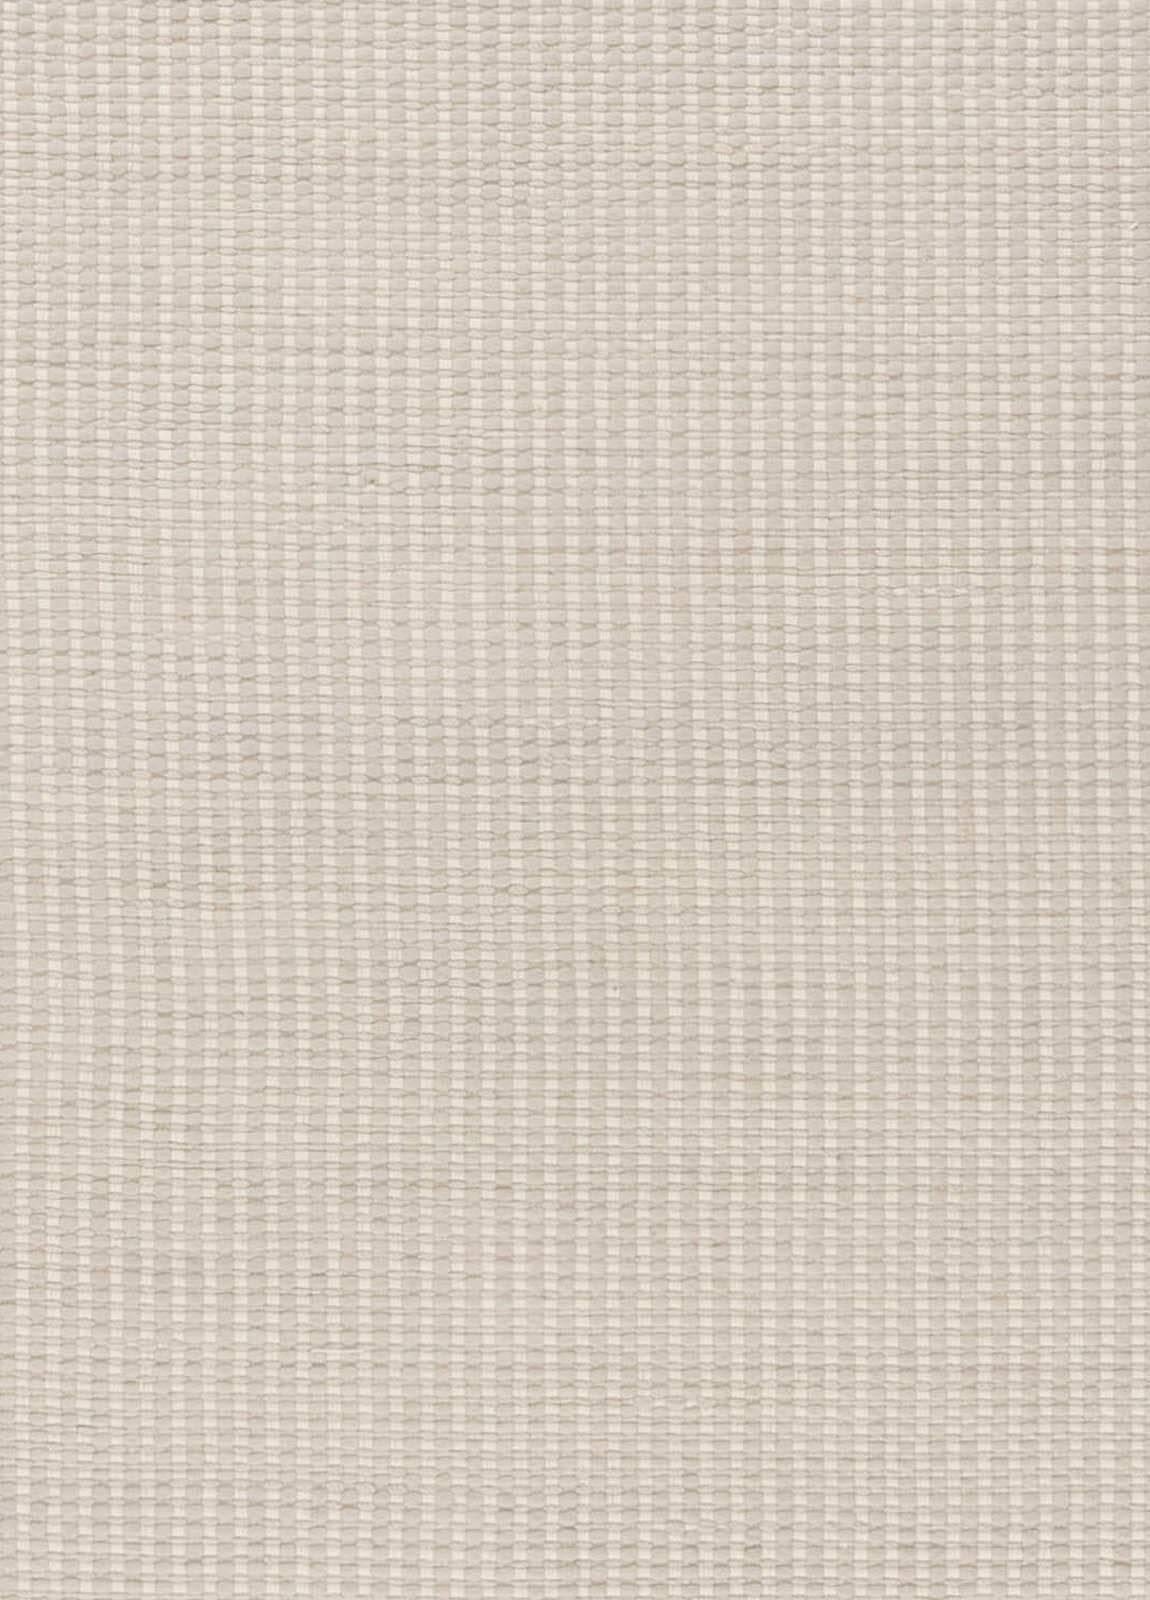 Contemporary solid beige, gray flat-weave wool rug by Doris Leslie Blau
Size: 10'8